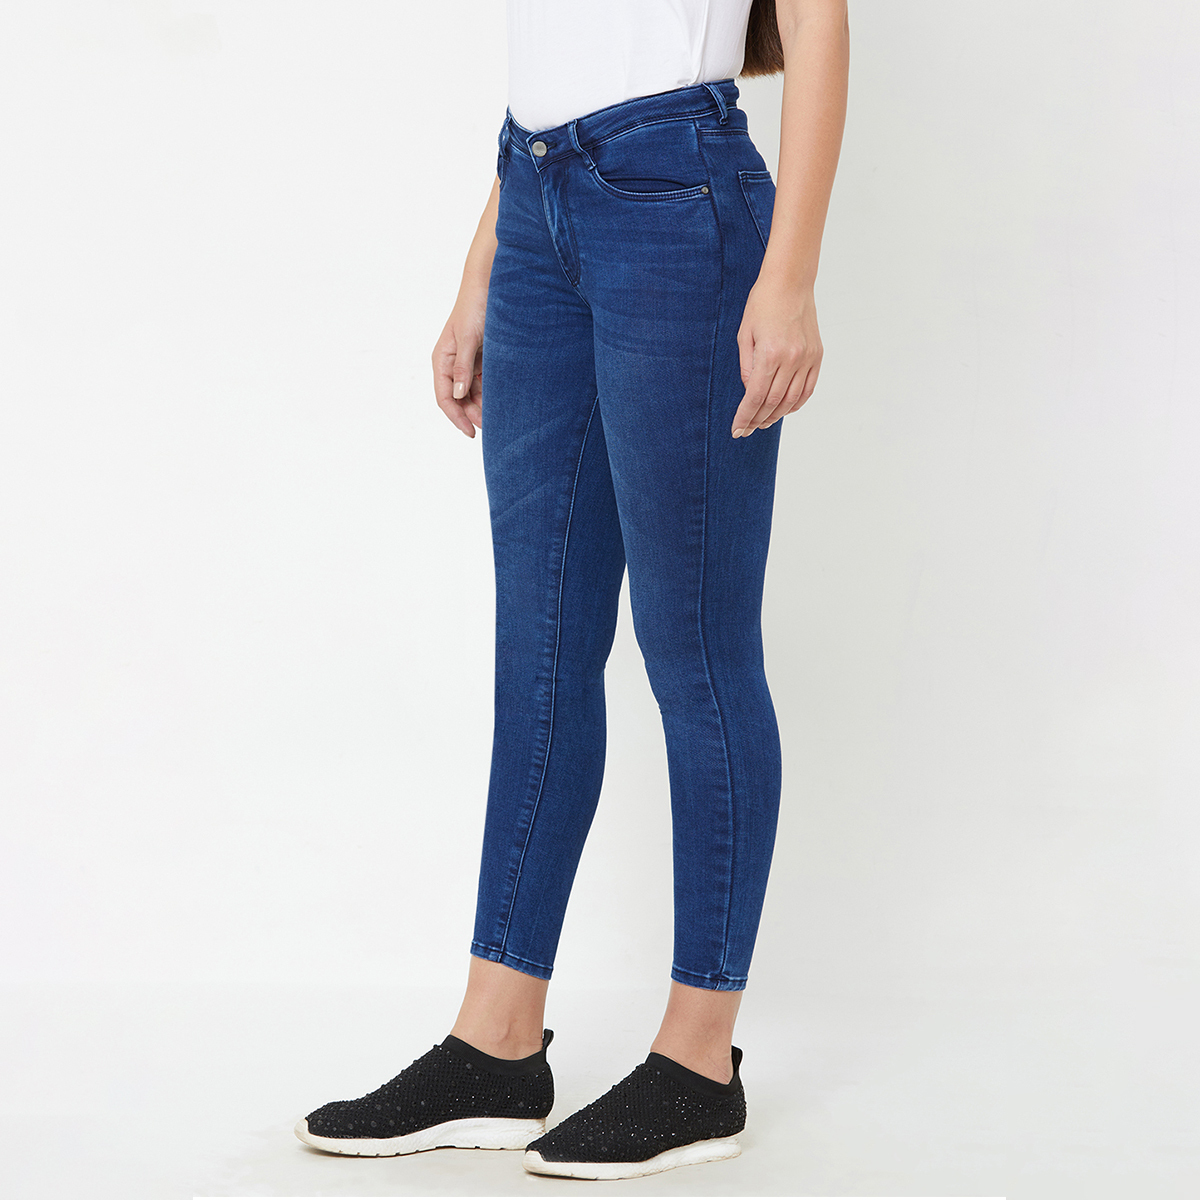 Buy Kraus Jeans Womens Jeans Blue Online - Lulu Hypermarket India